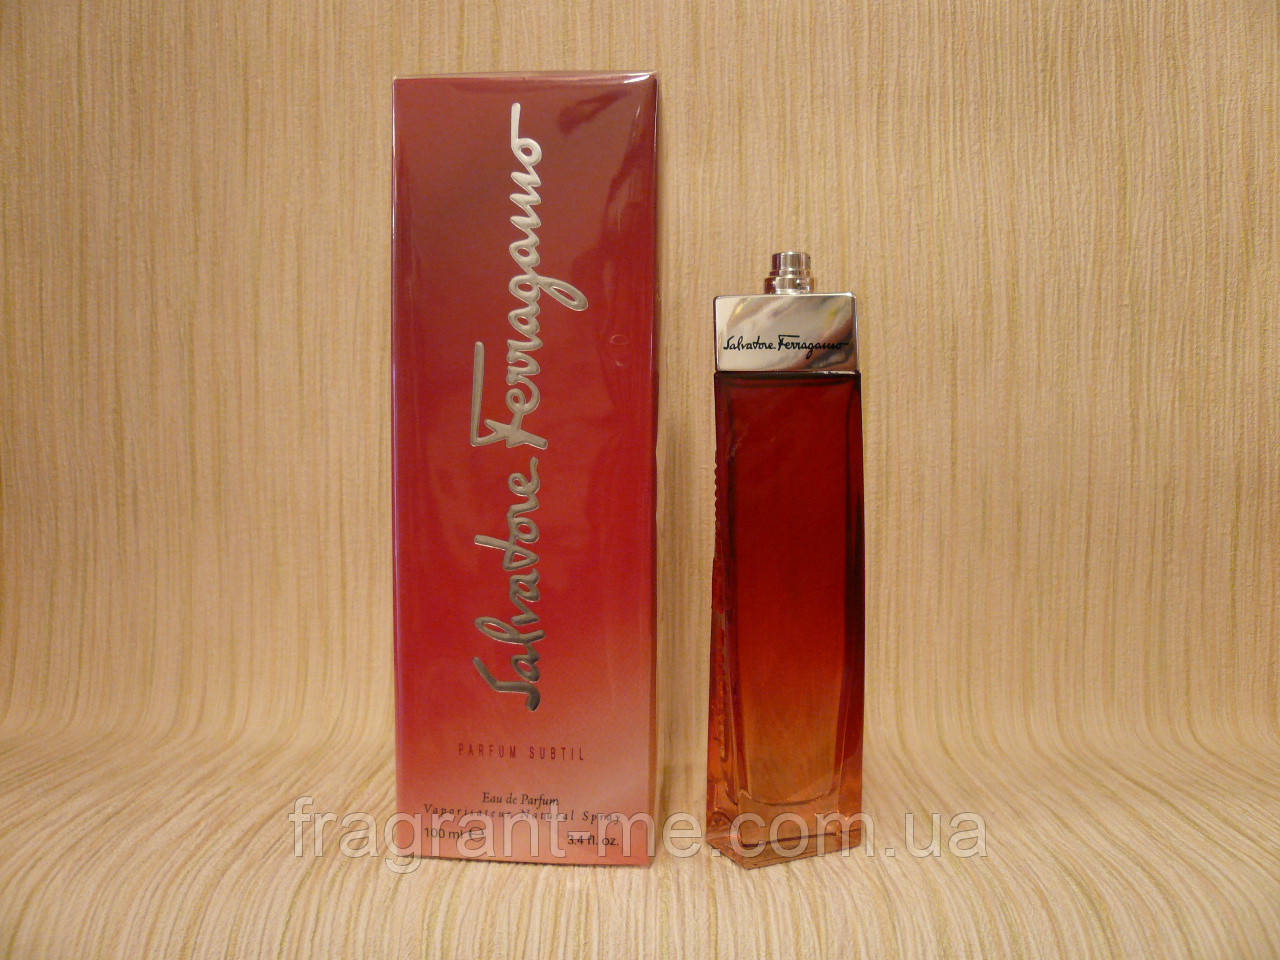 Salvatore Ferragamo — Parfum Subtil (2002) — Парфумована вода 50 мл (тестер) — Рідкий аромат